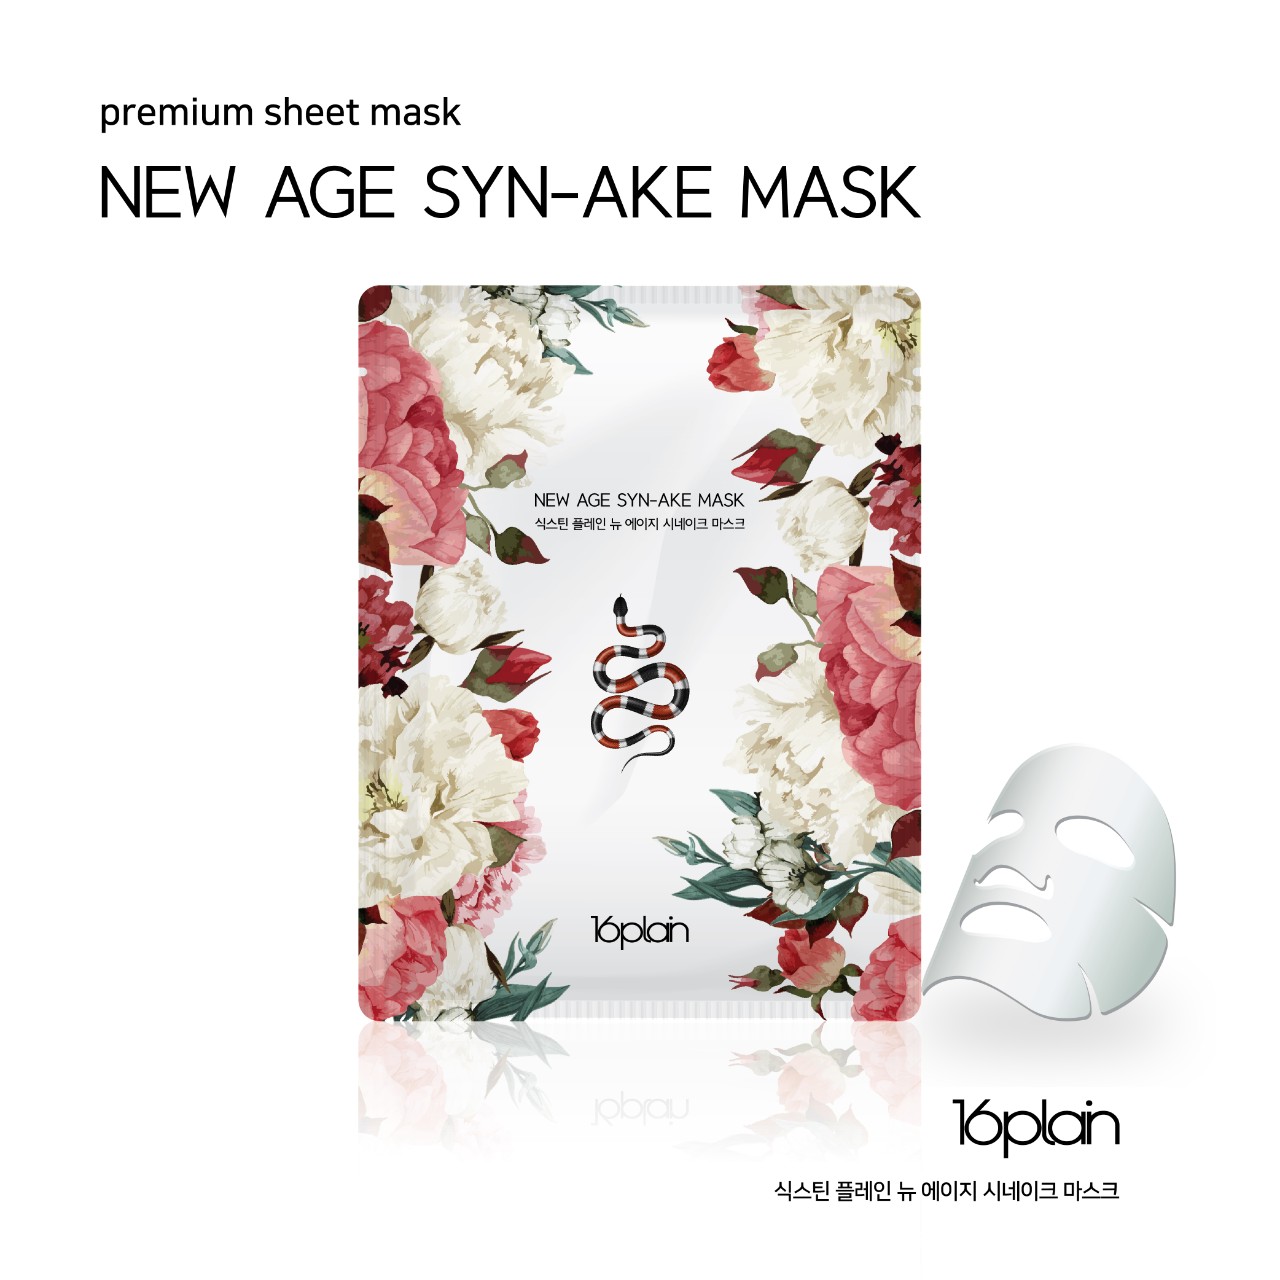 16Plain New Age Syn-ake Mask